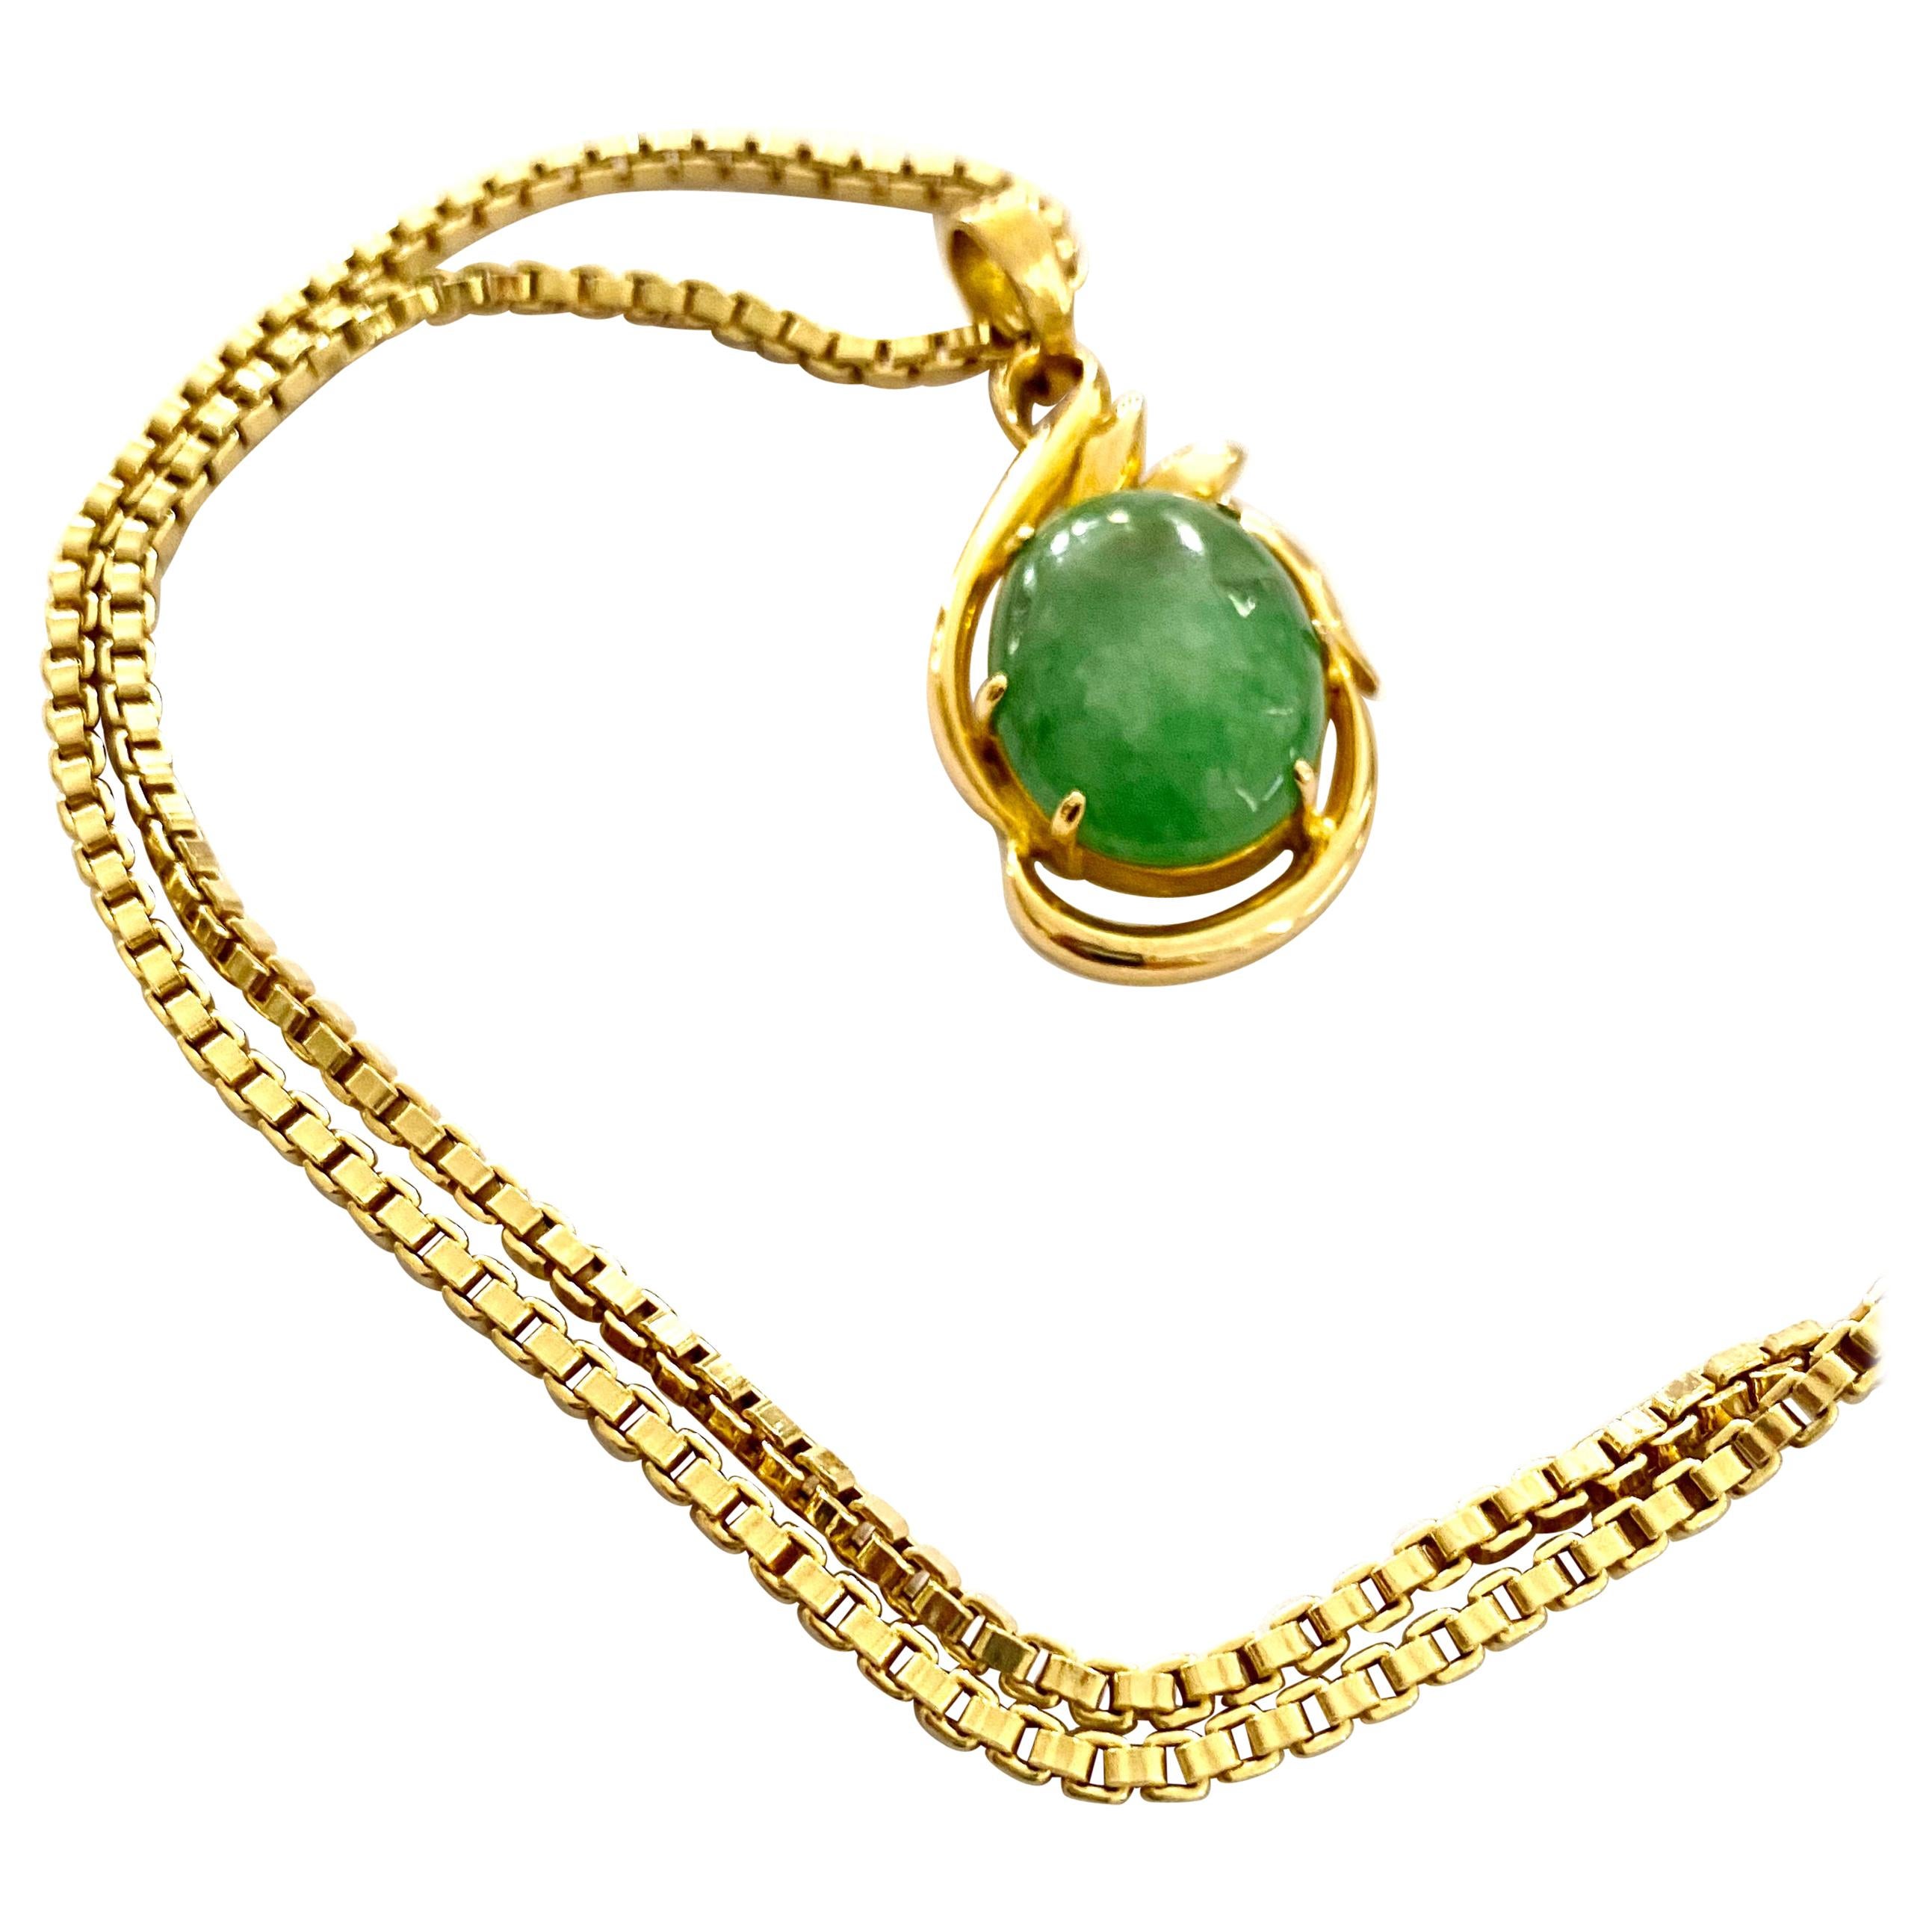 18 Karat Yellow Gold Pendant with Green Quartz and Chain 18 Karat